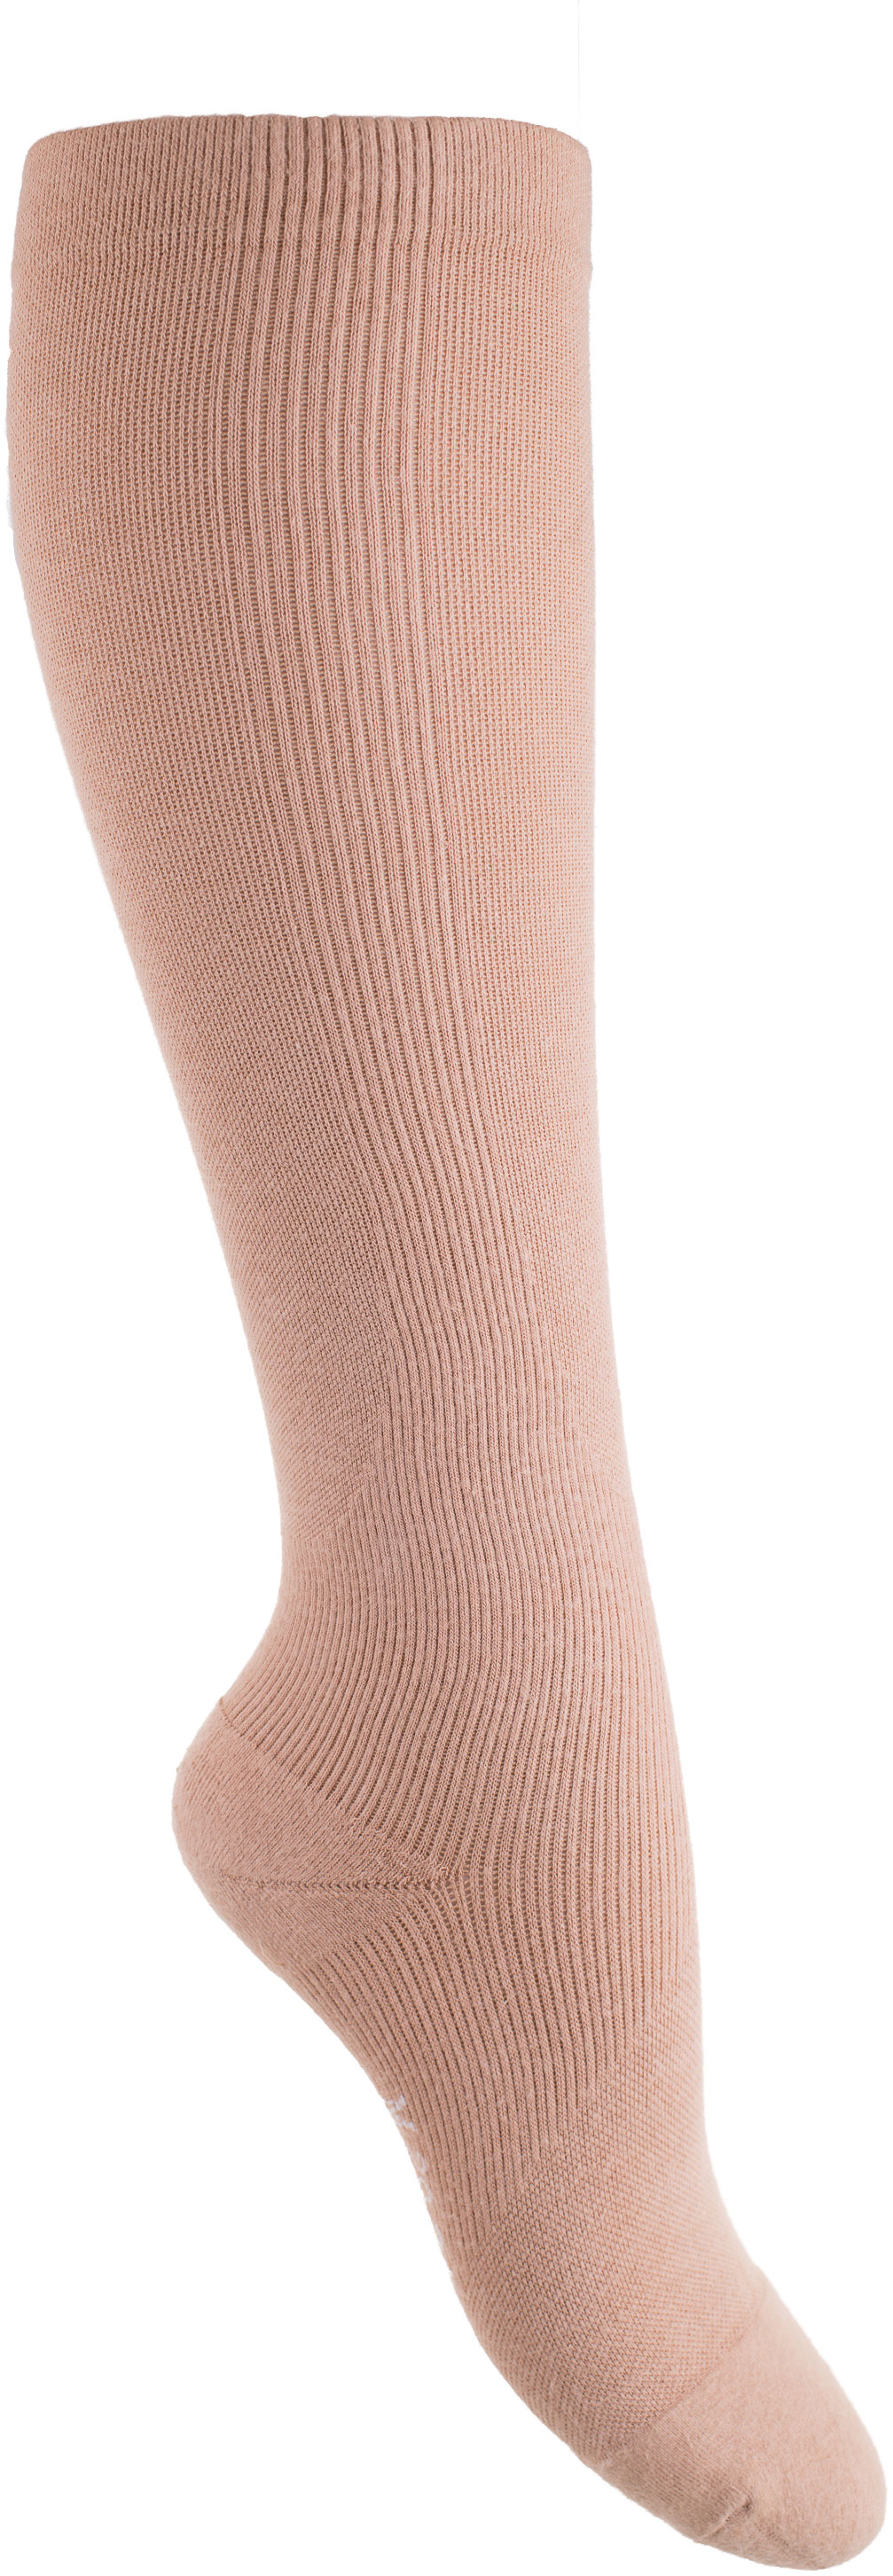 480D 西德棉材質 彈性小腿襪